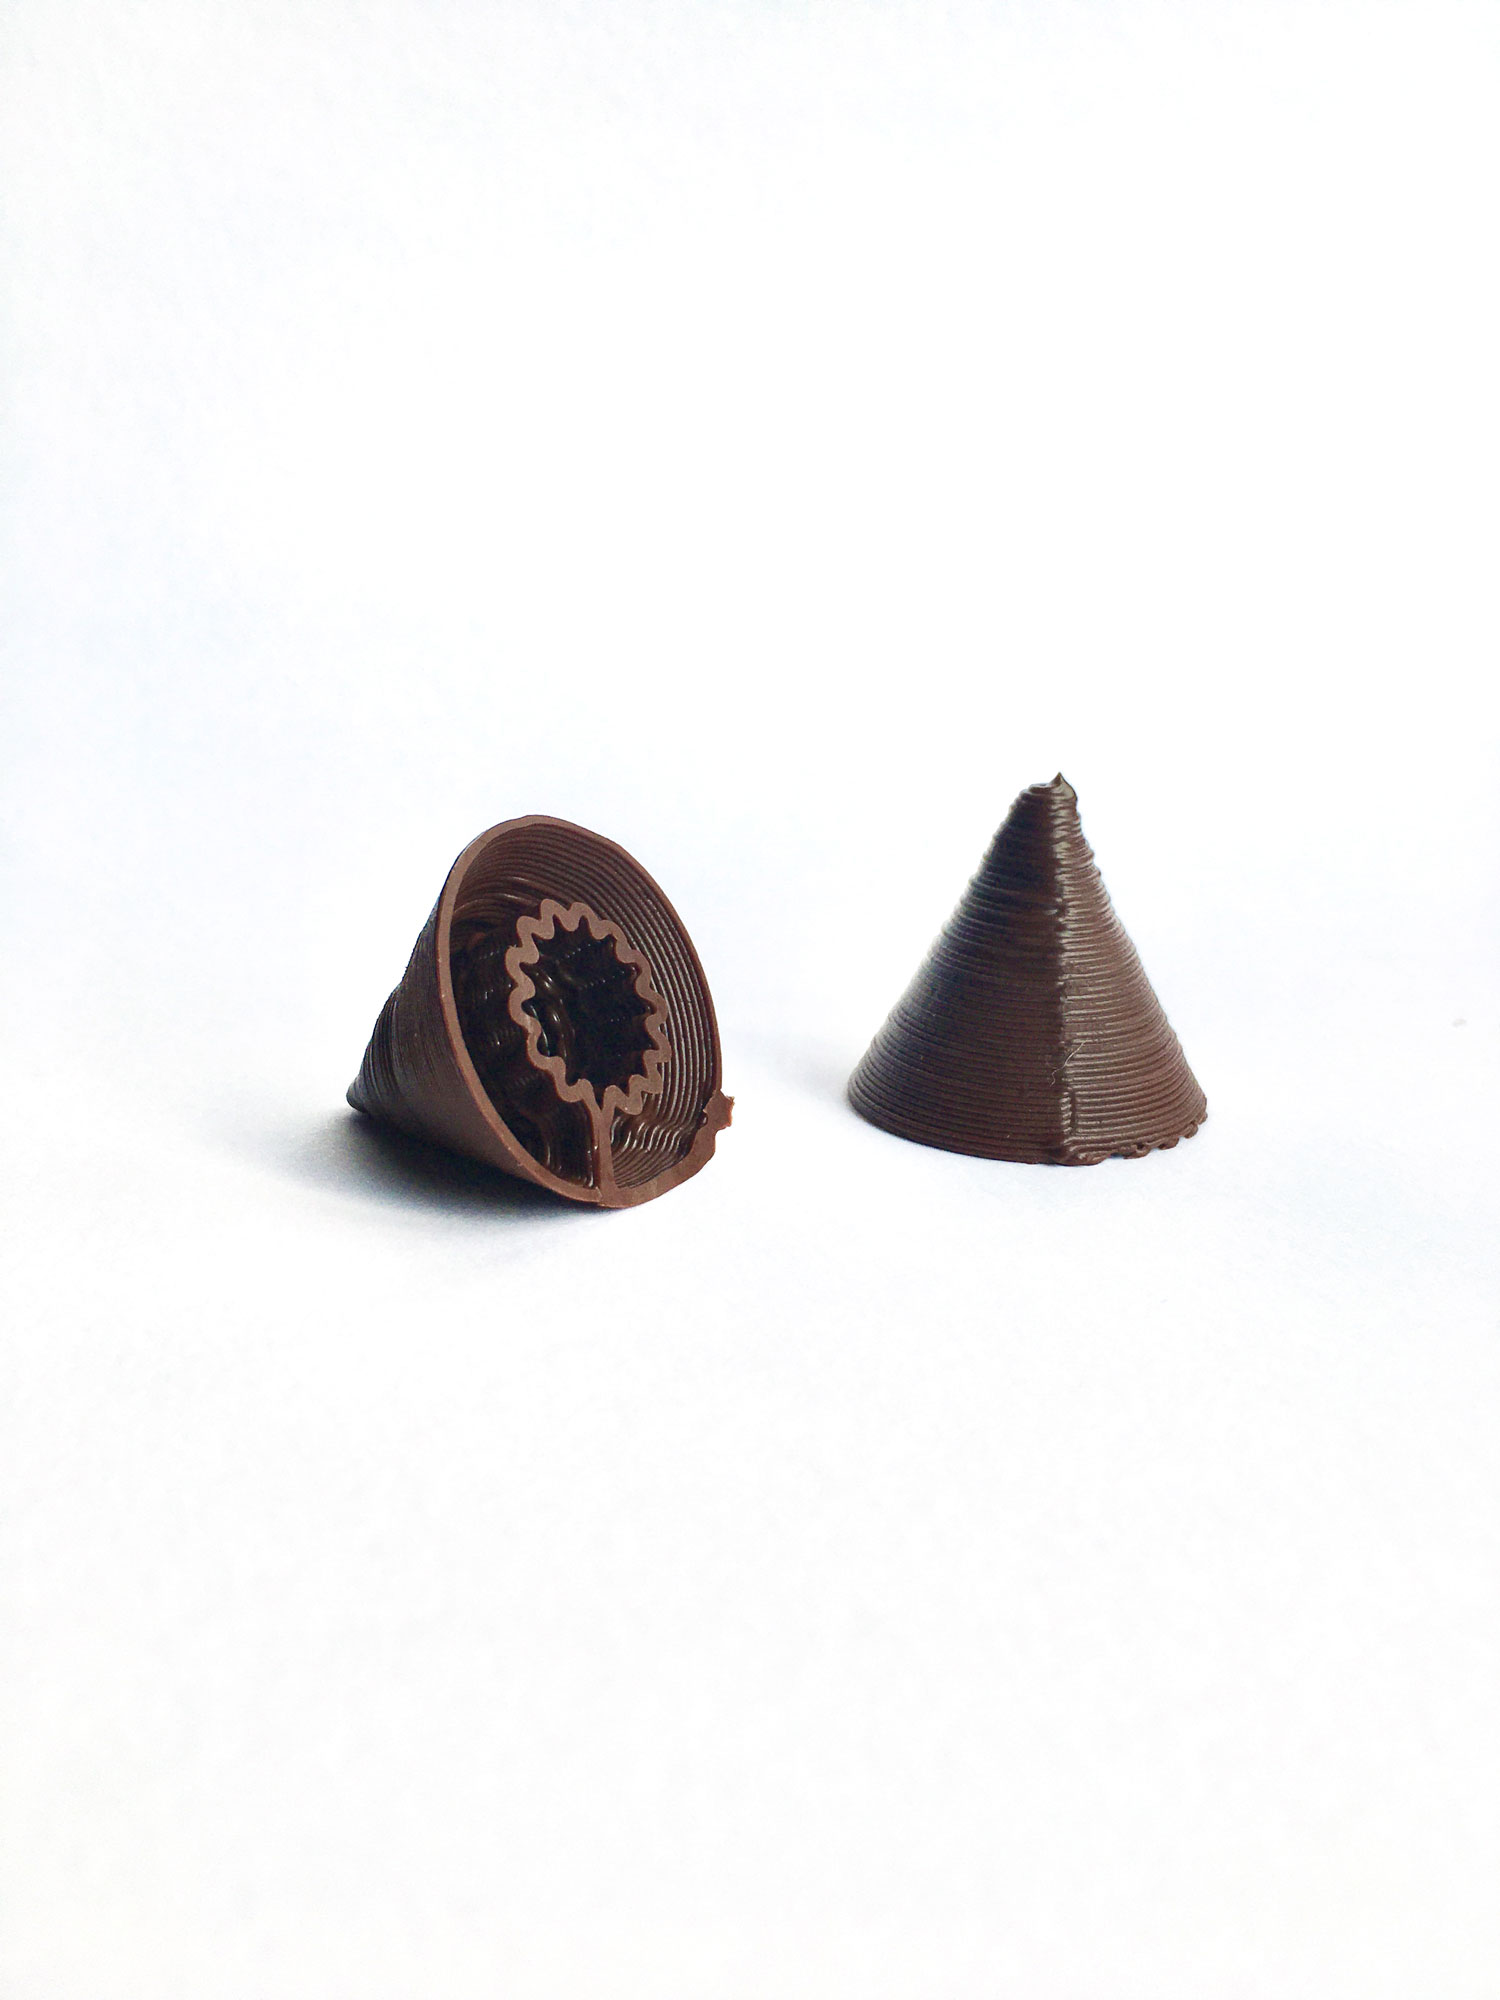 More than shape - Chocolat, impression 3D - Installation (More than shape Full Show) : 100 x 200 x 4 cm, chocolats : dimensions variables - 2020